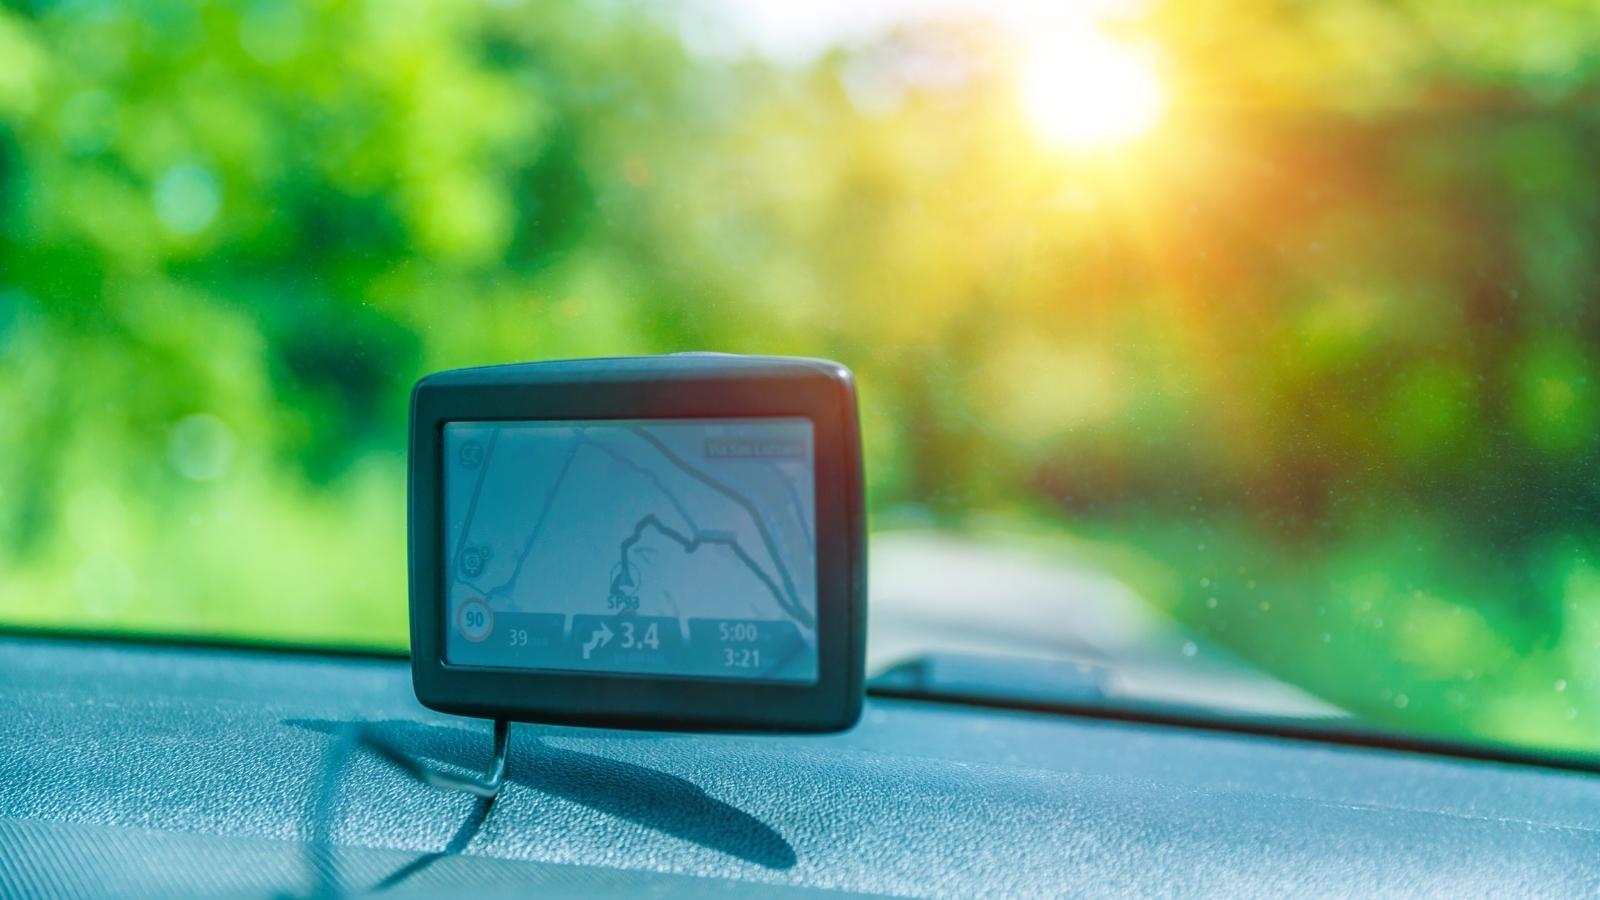 The Car GPS - Understanding your dreams - Kaya